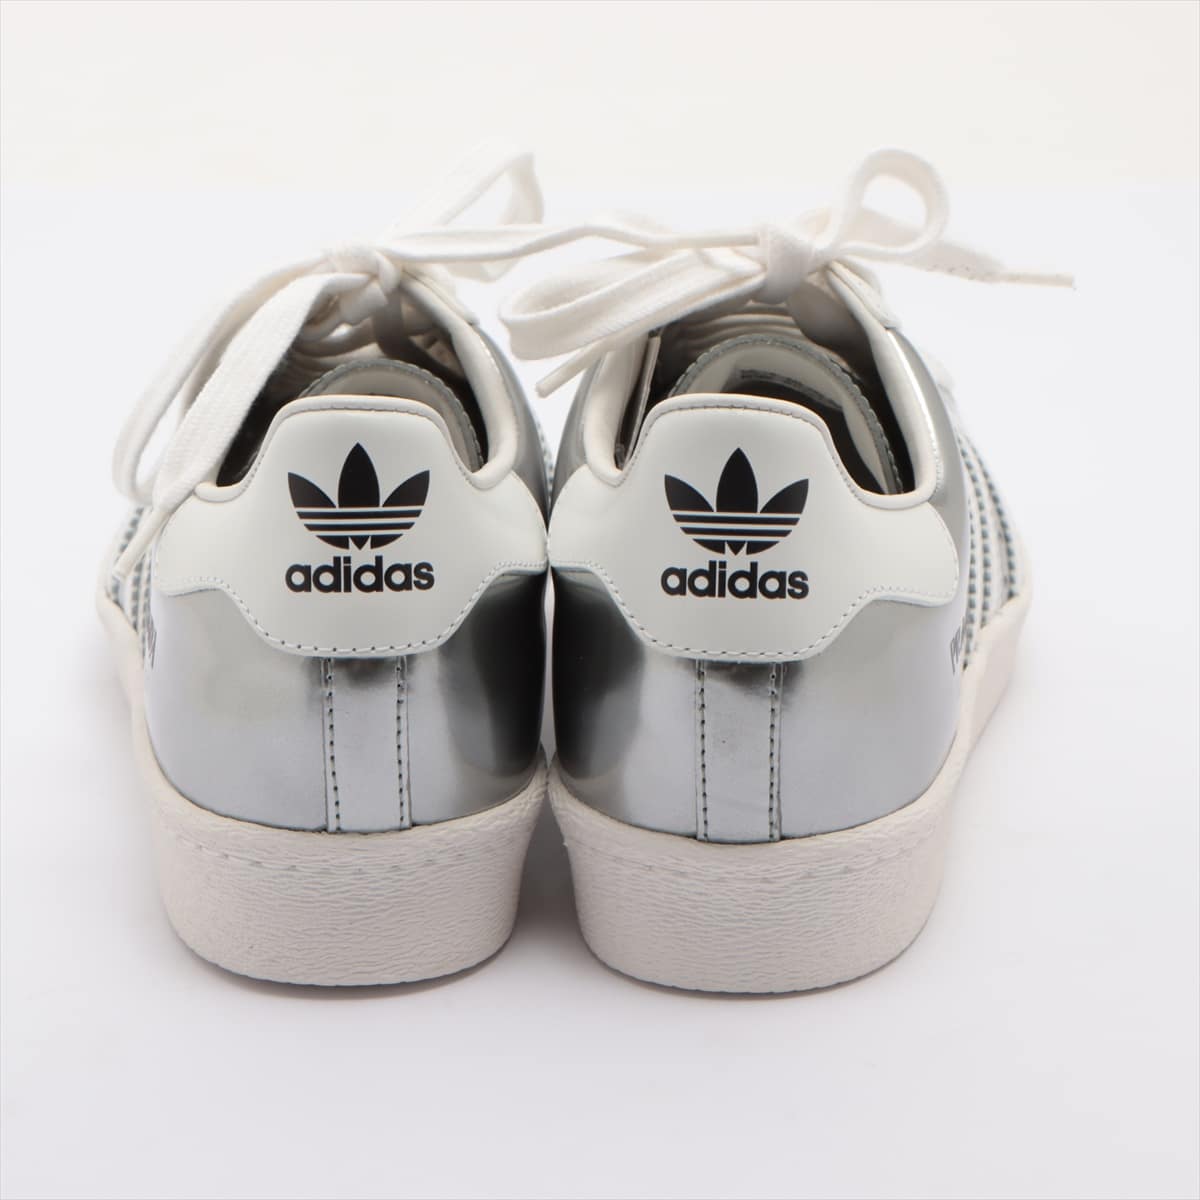 Prada x Adidas 20 years Leather Sneakers 25.5 Ladies' White x silver PRADA SUPERSTAR FX4546